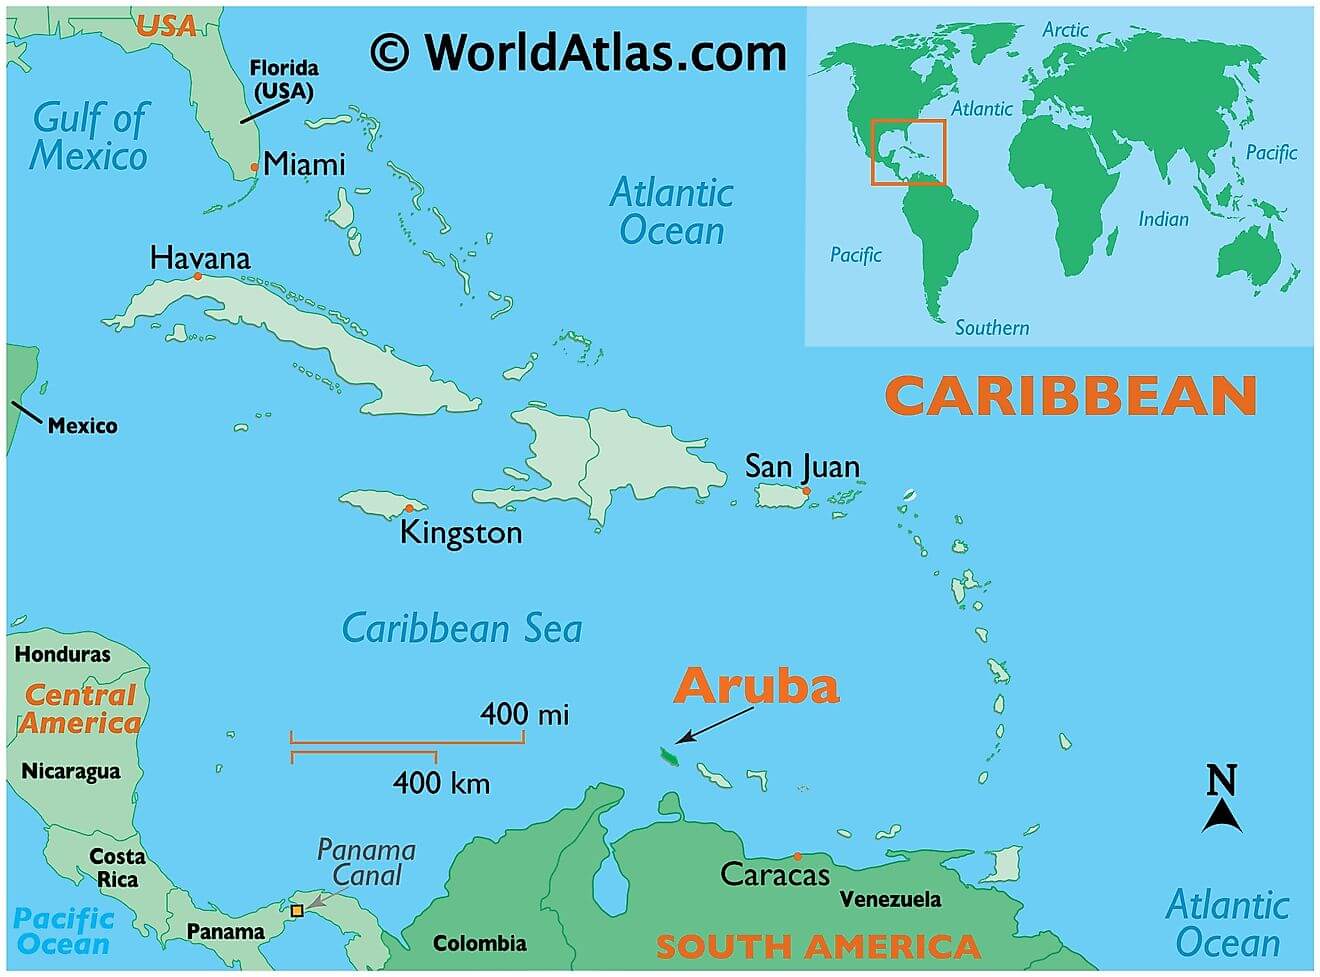 Where is Aruba?